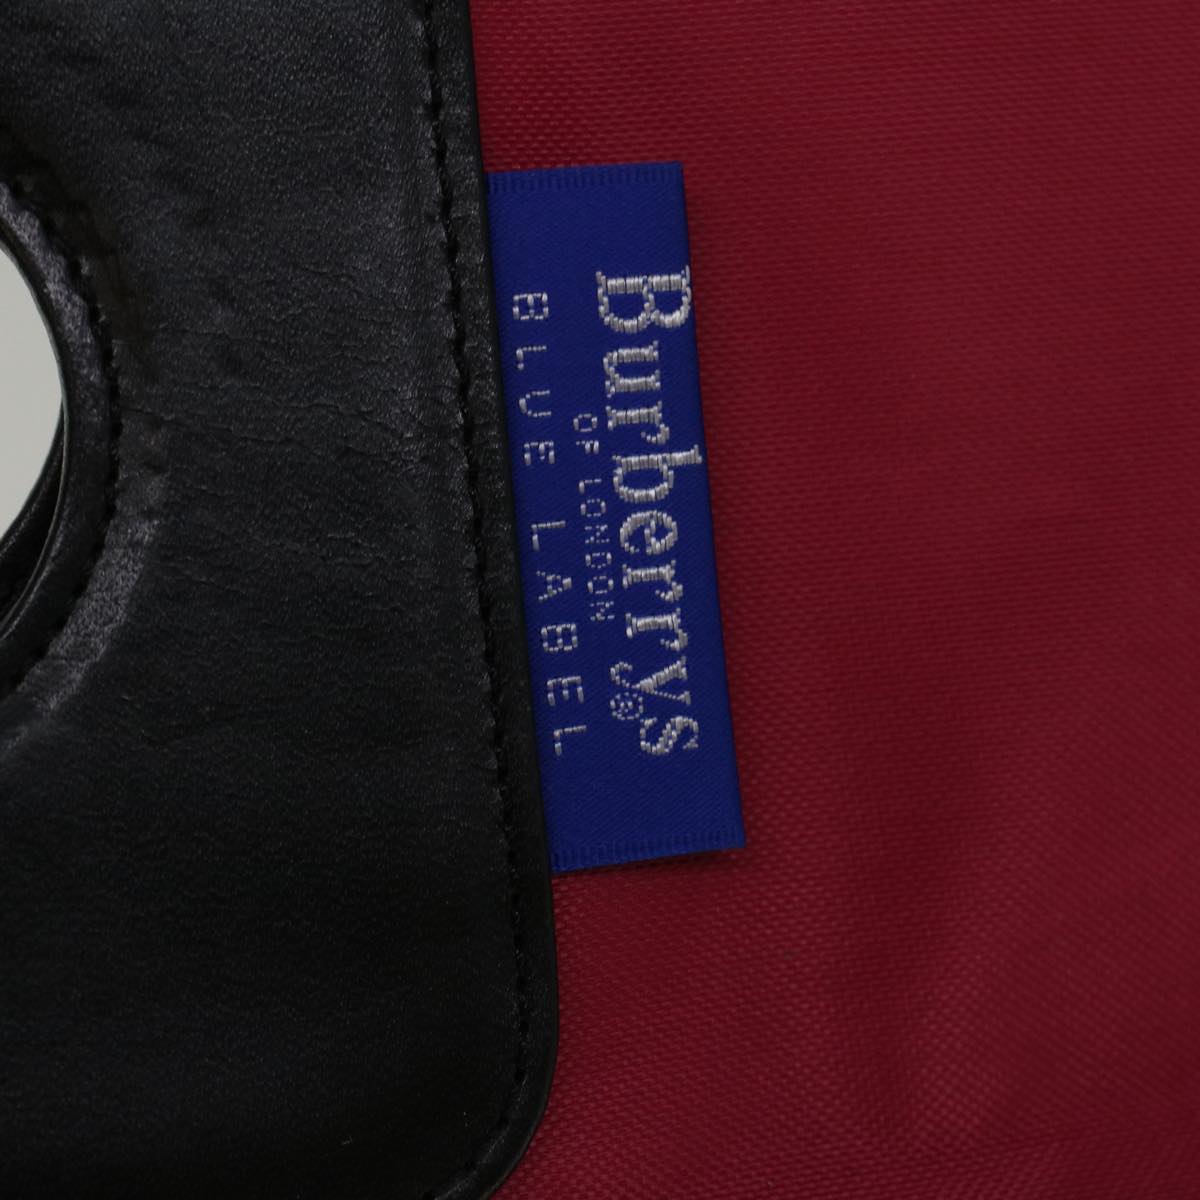 Burberrys Nova Check Blue Label Hand Bag Nylon Red Gray Auth bs8760